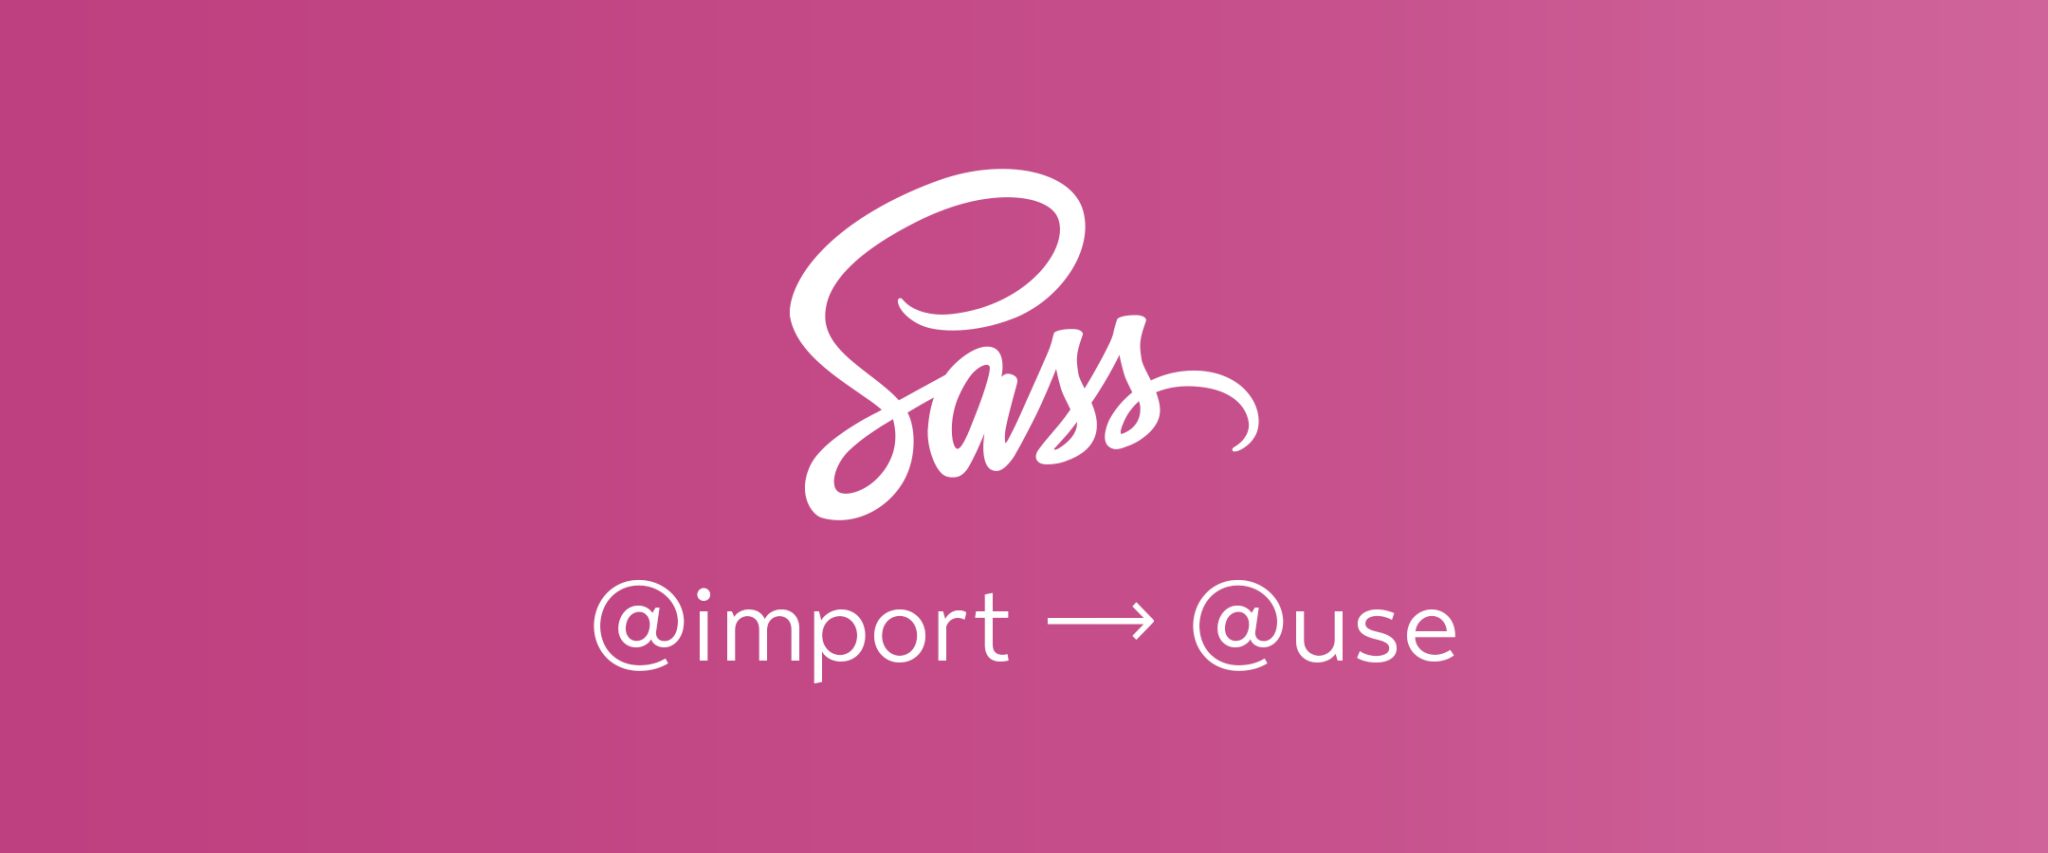 Sass @import → @use